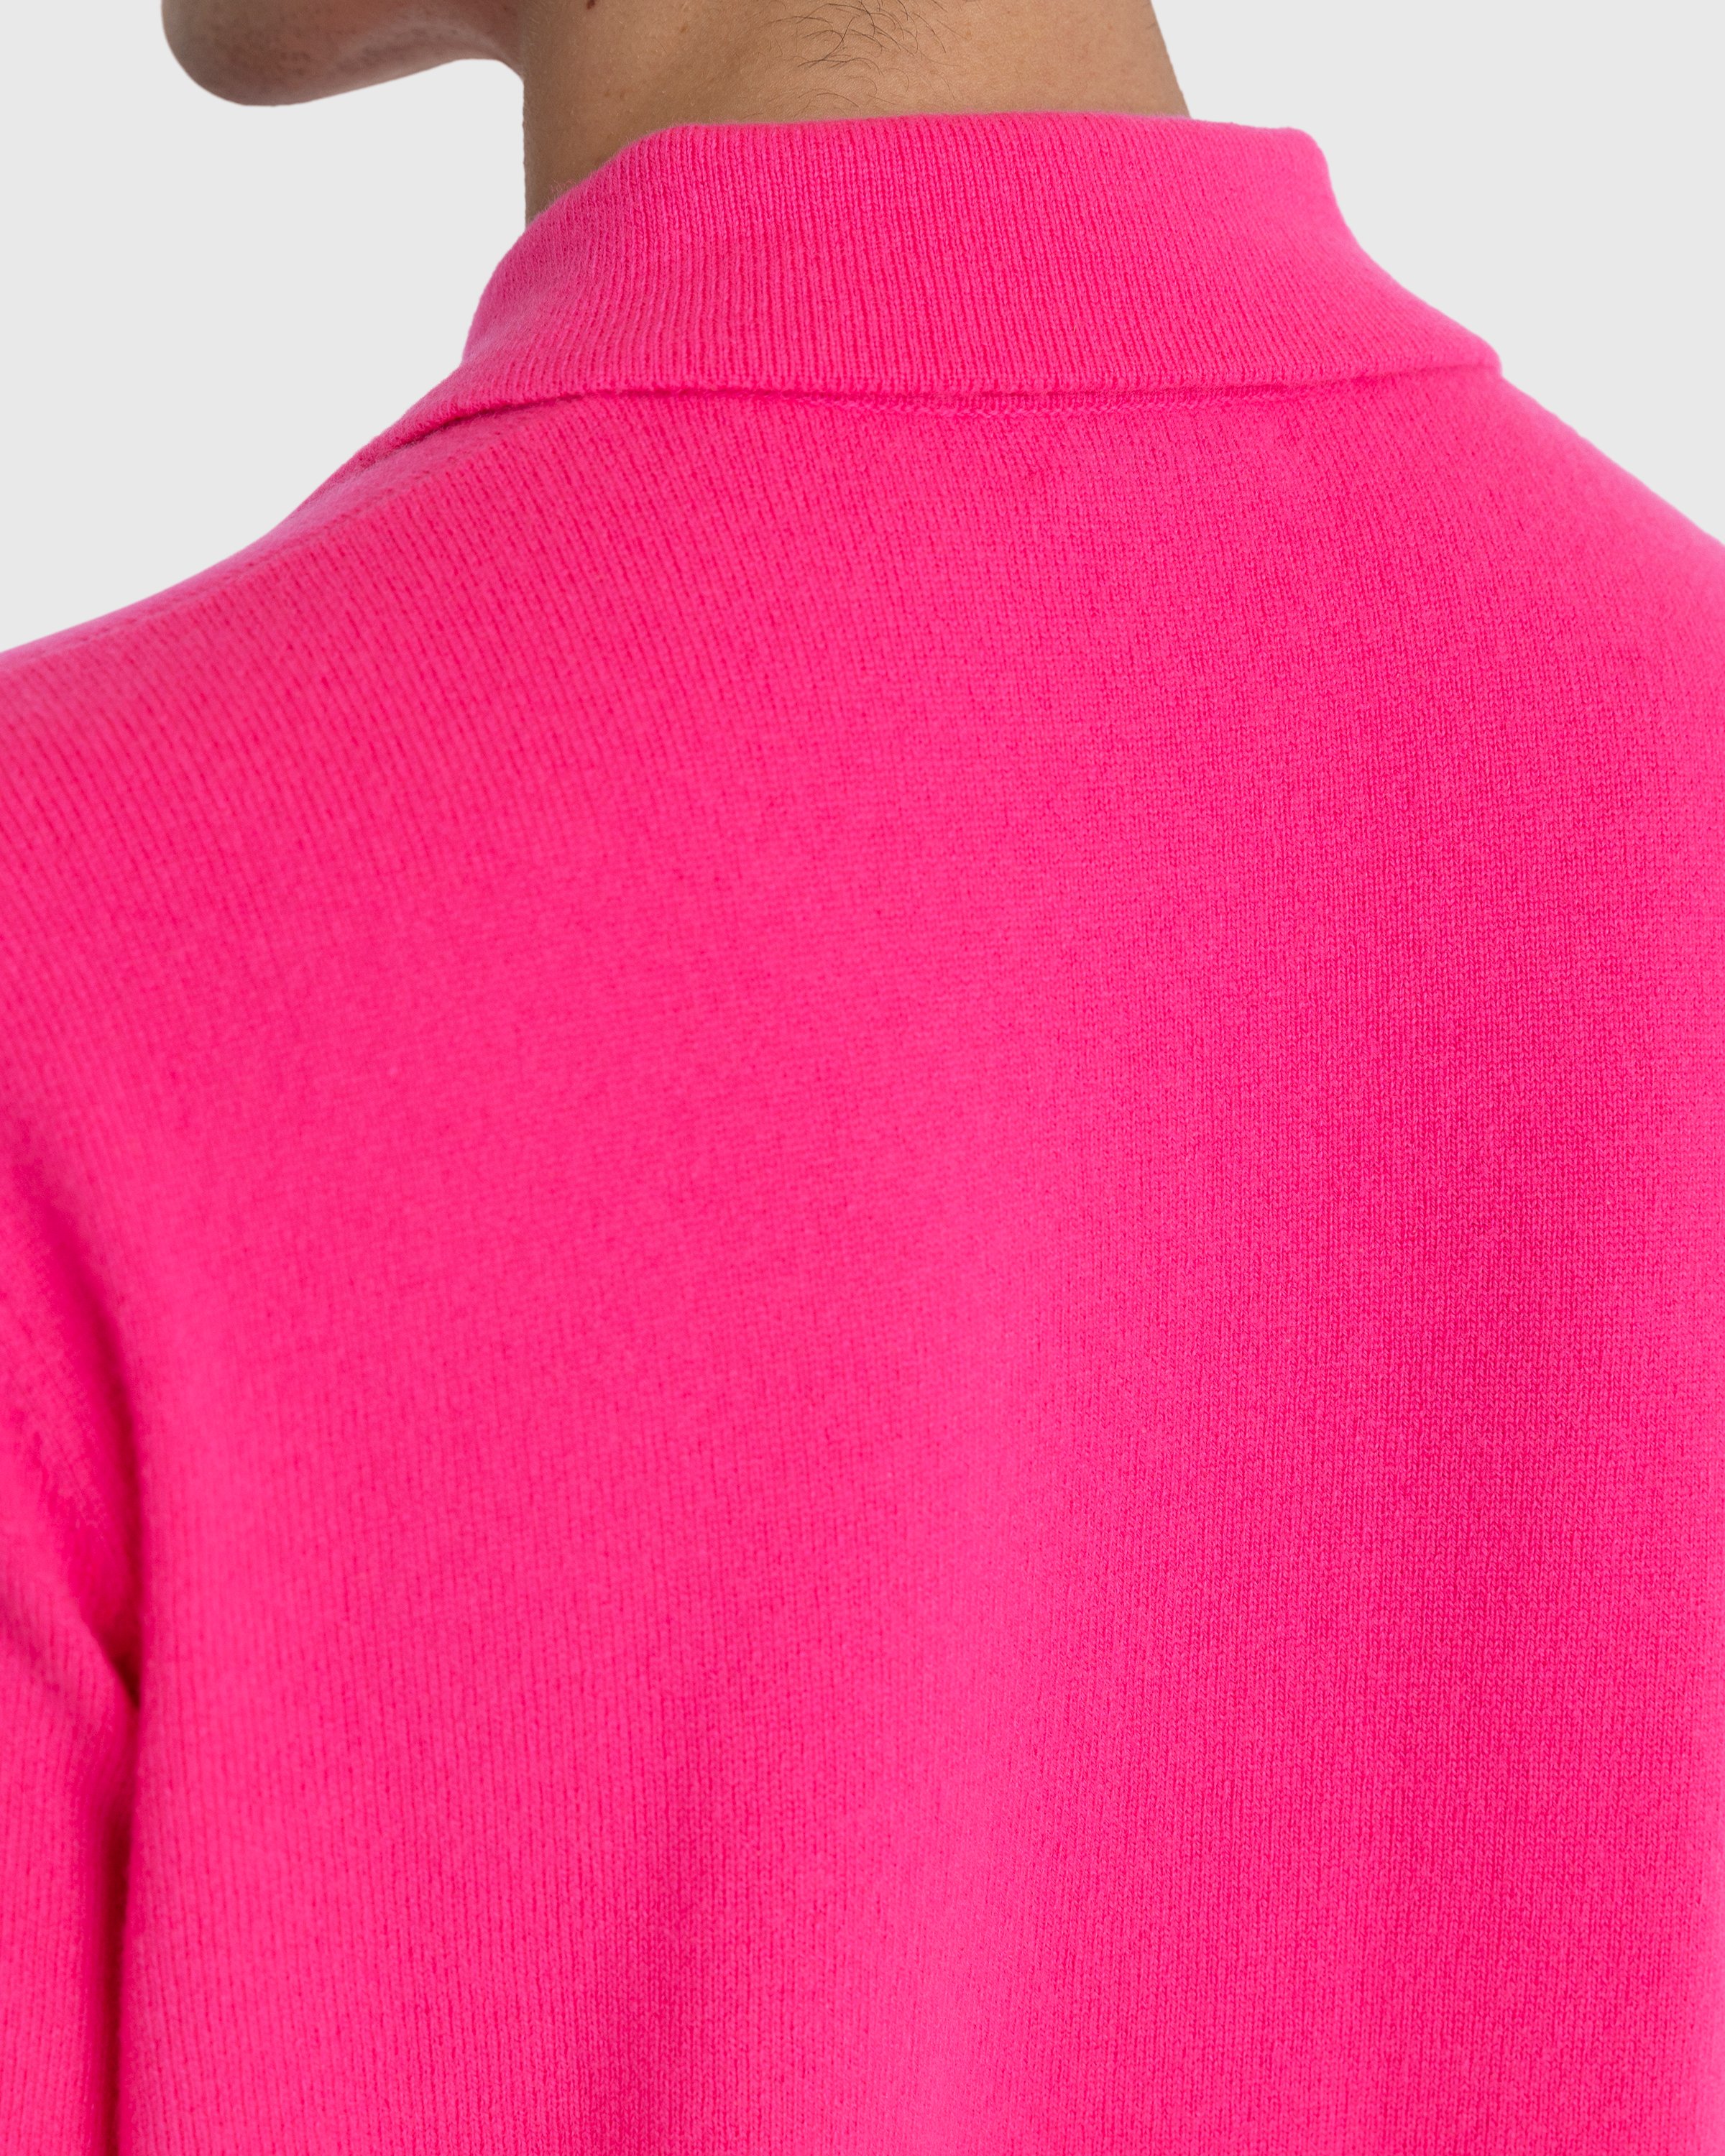 Dries van Noten - Never Cardigan - Clothing - Pink - Image 5